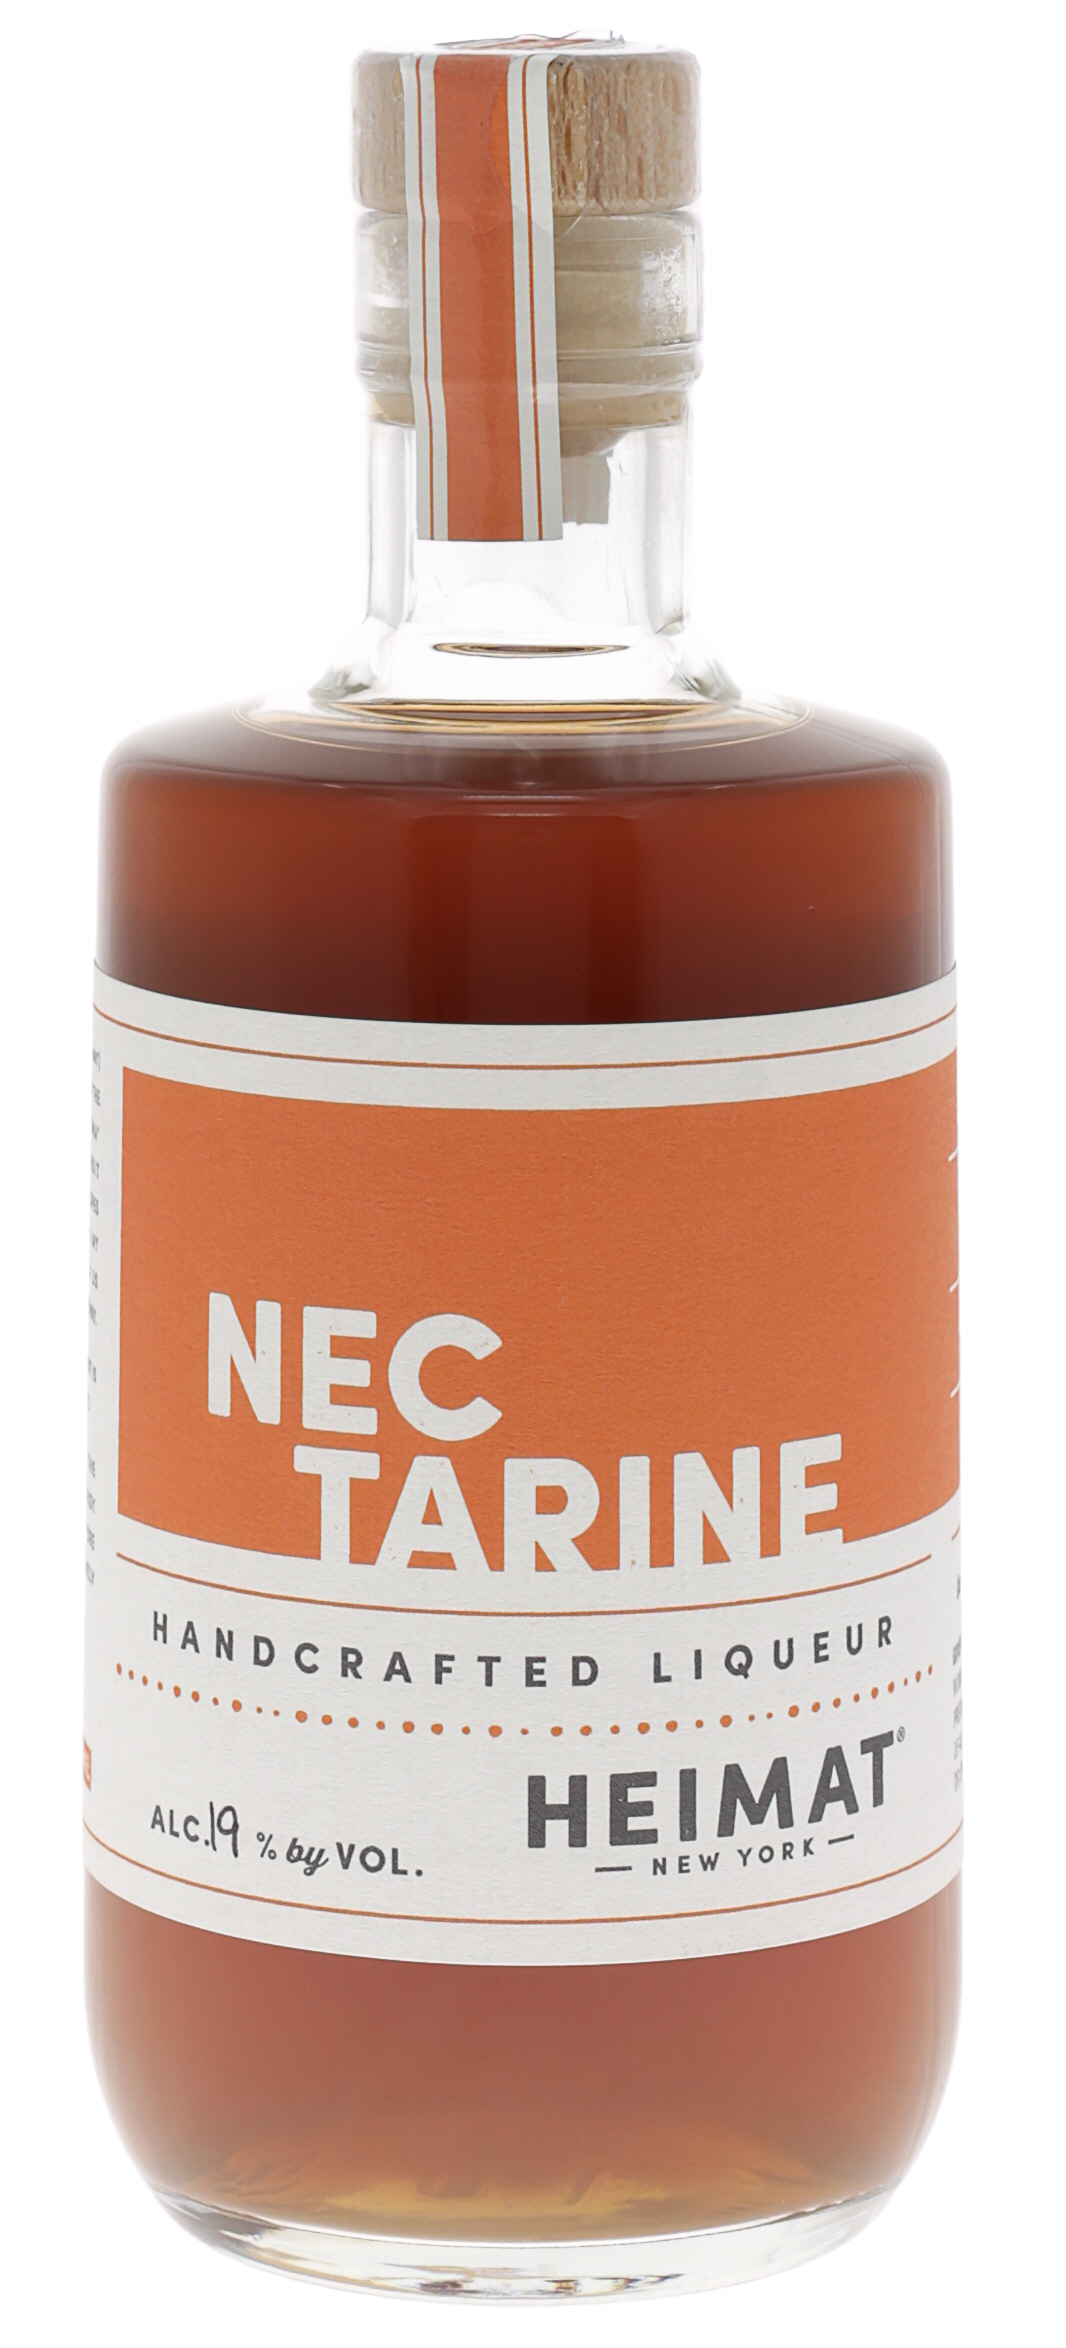 Heimat New York Nectarine Liqueur